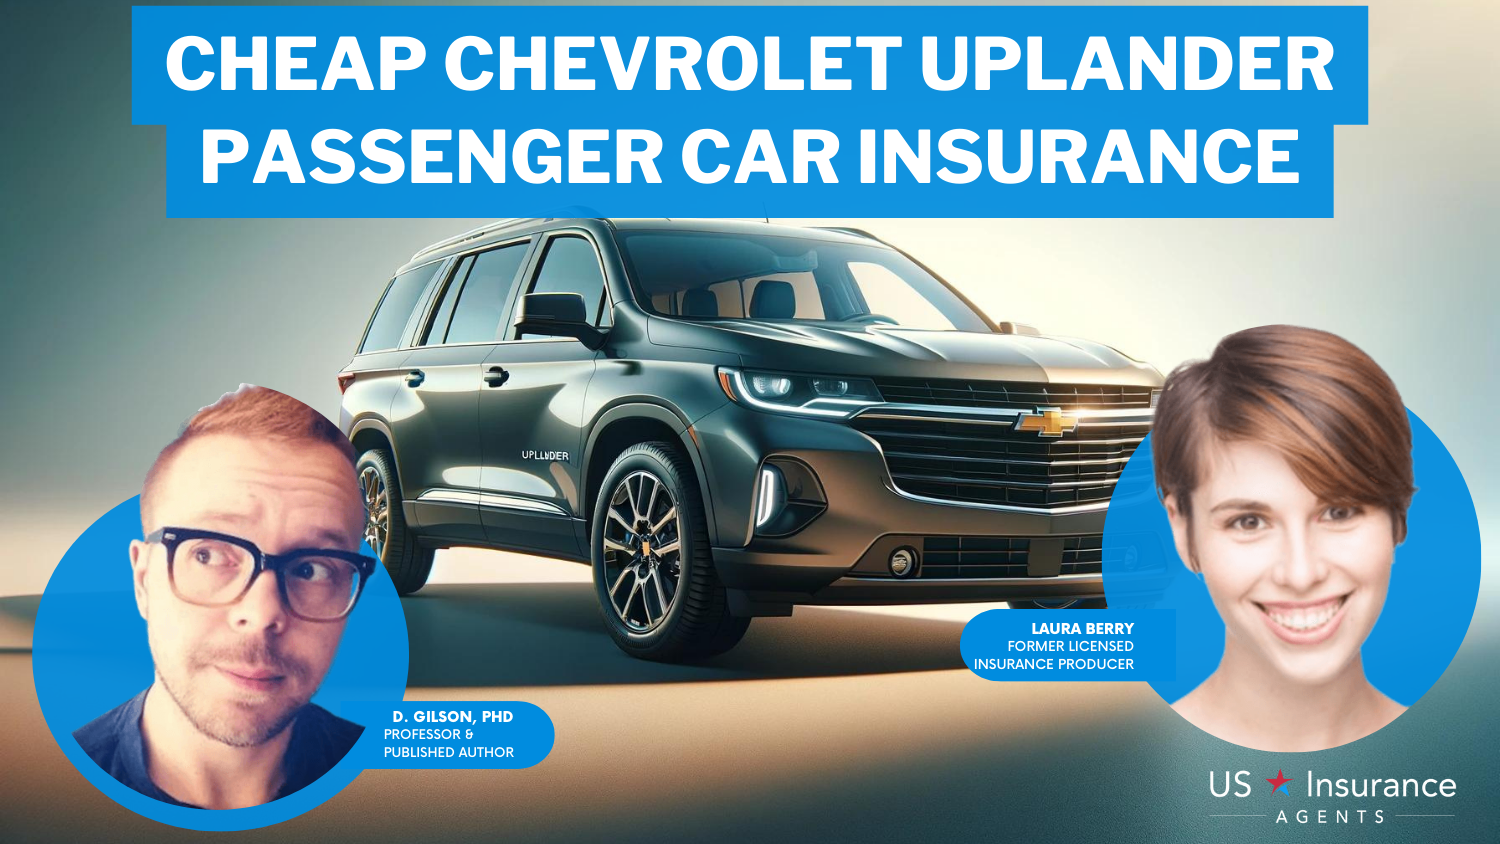 Cheap Chevrolet Uplander Passenger Car Insurance: USAA, Erie, and Safeco.